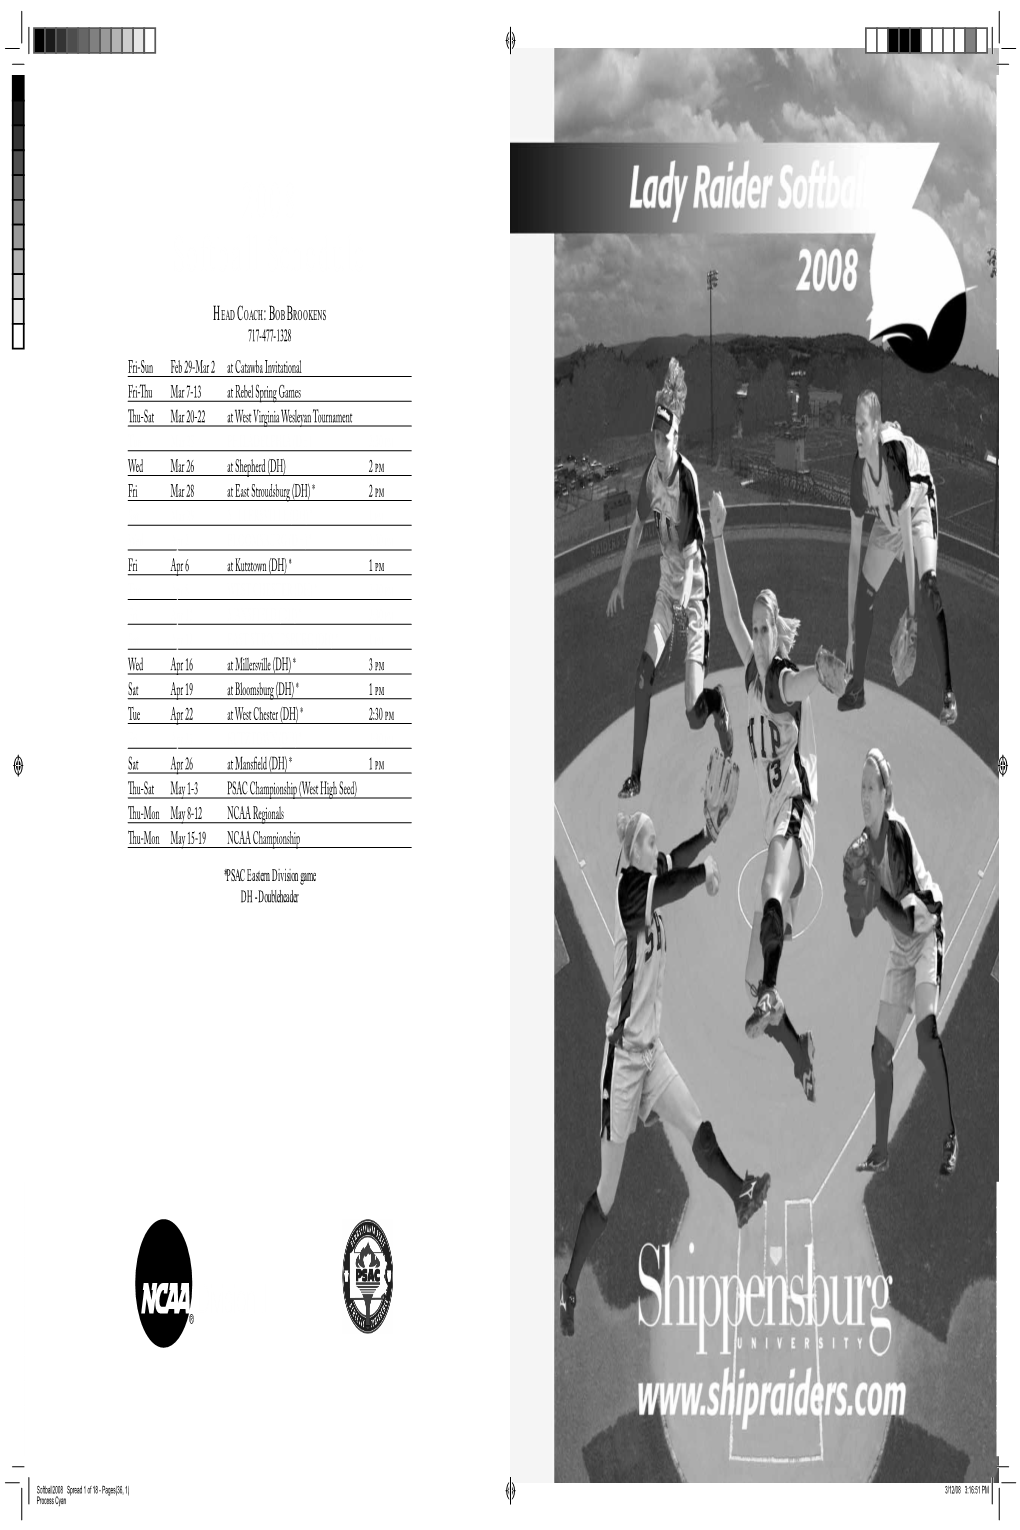 2008 Softball Schedule